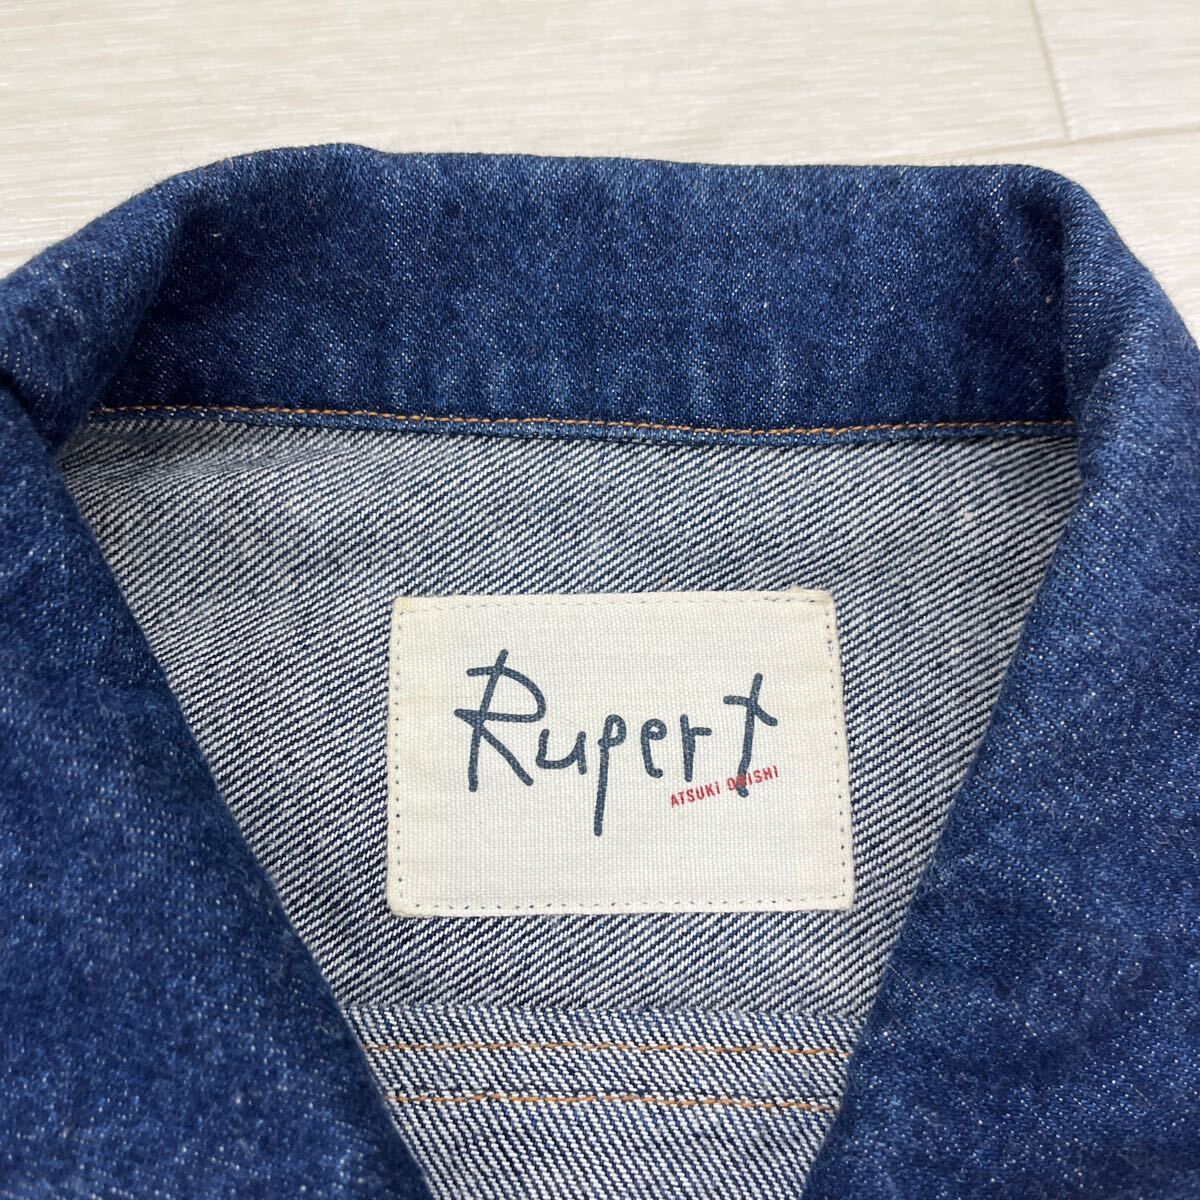 1371◎ Rupert ATSUKI ONISHI トップス デニム ジャケット ジージャン フルボタン 背面 イラスト プリント ブルー メンズM_画像4